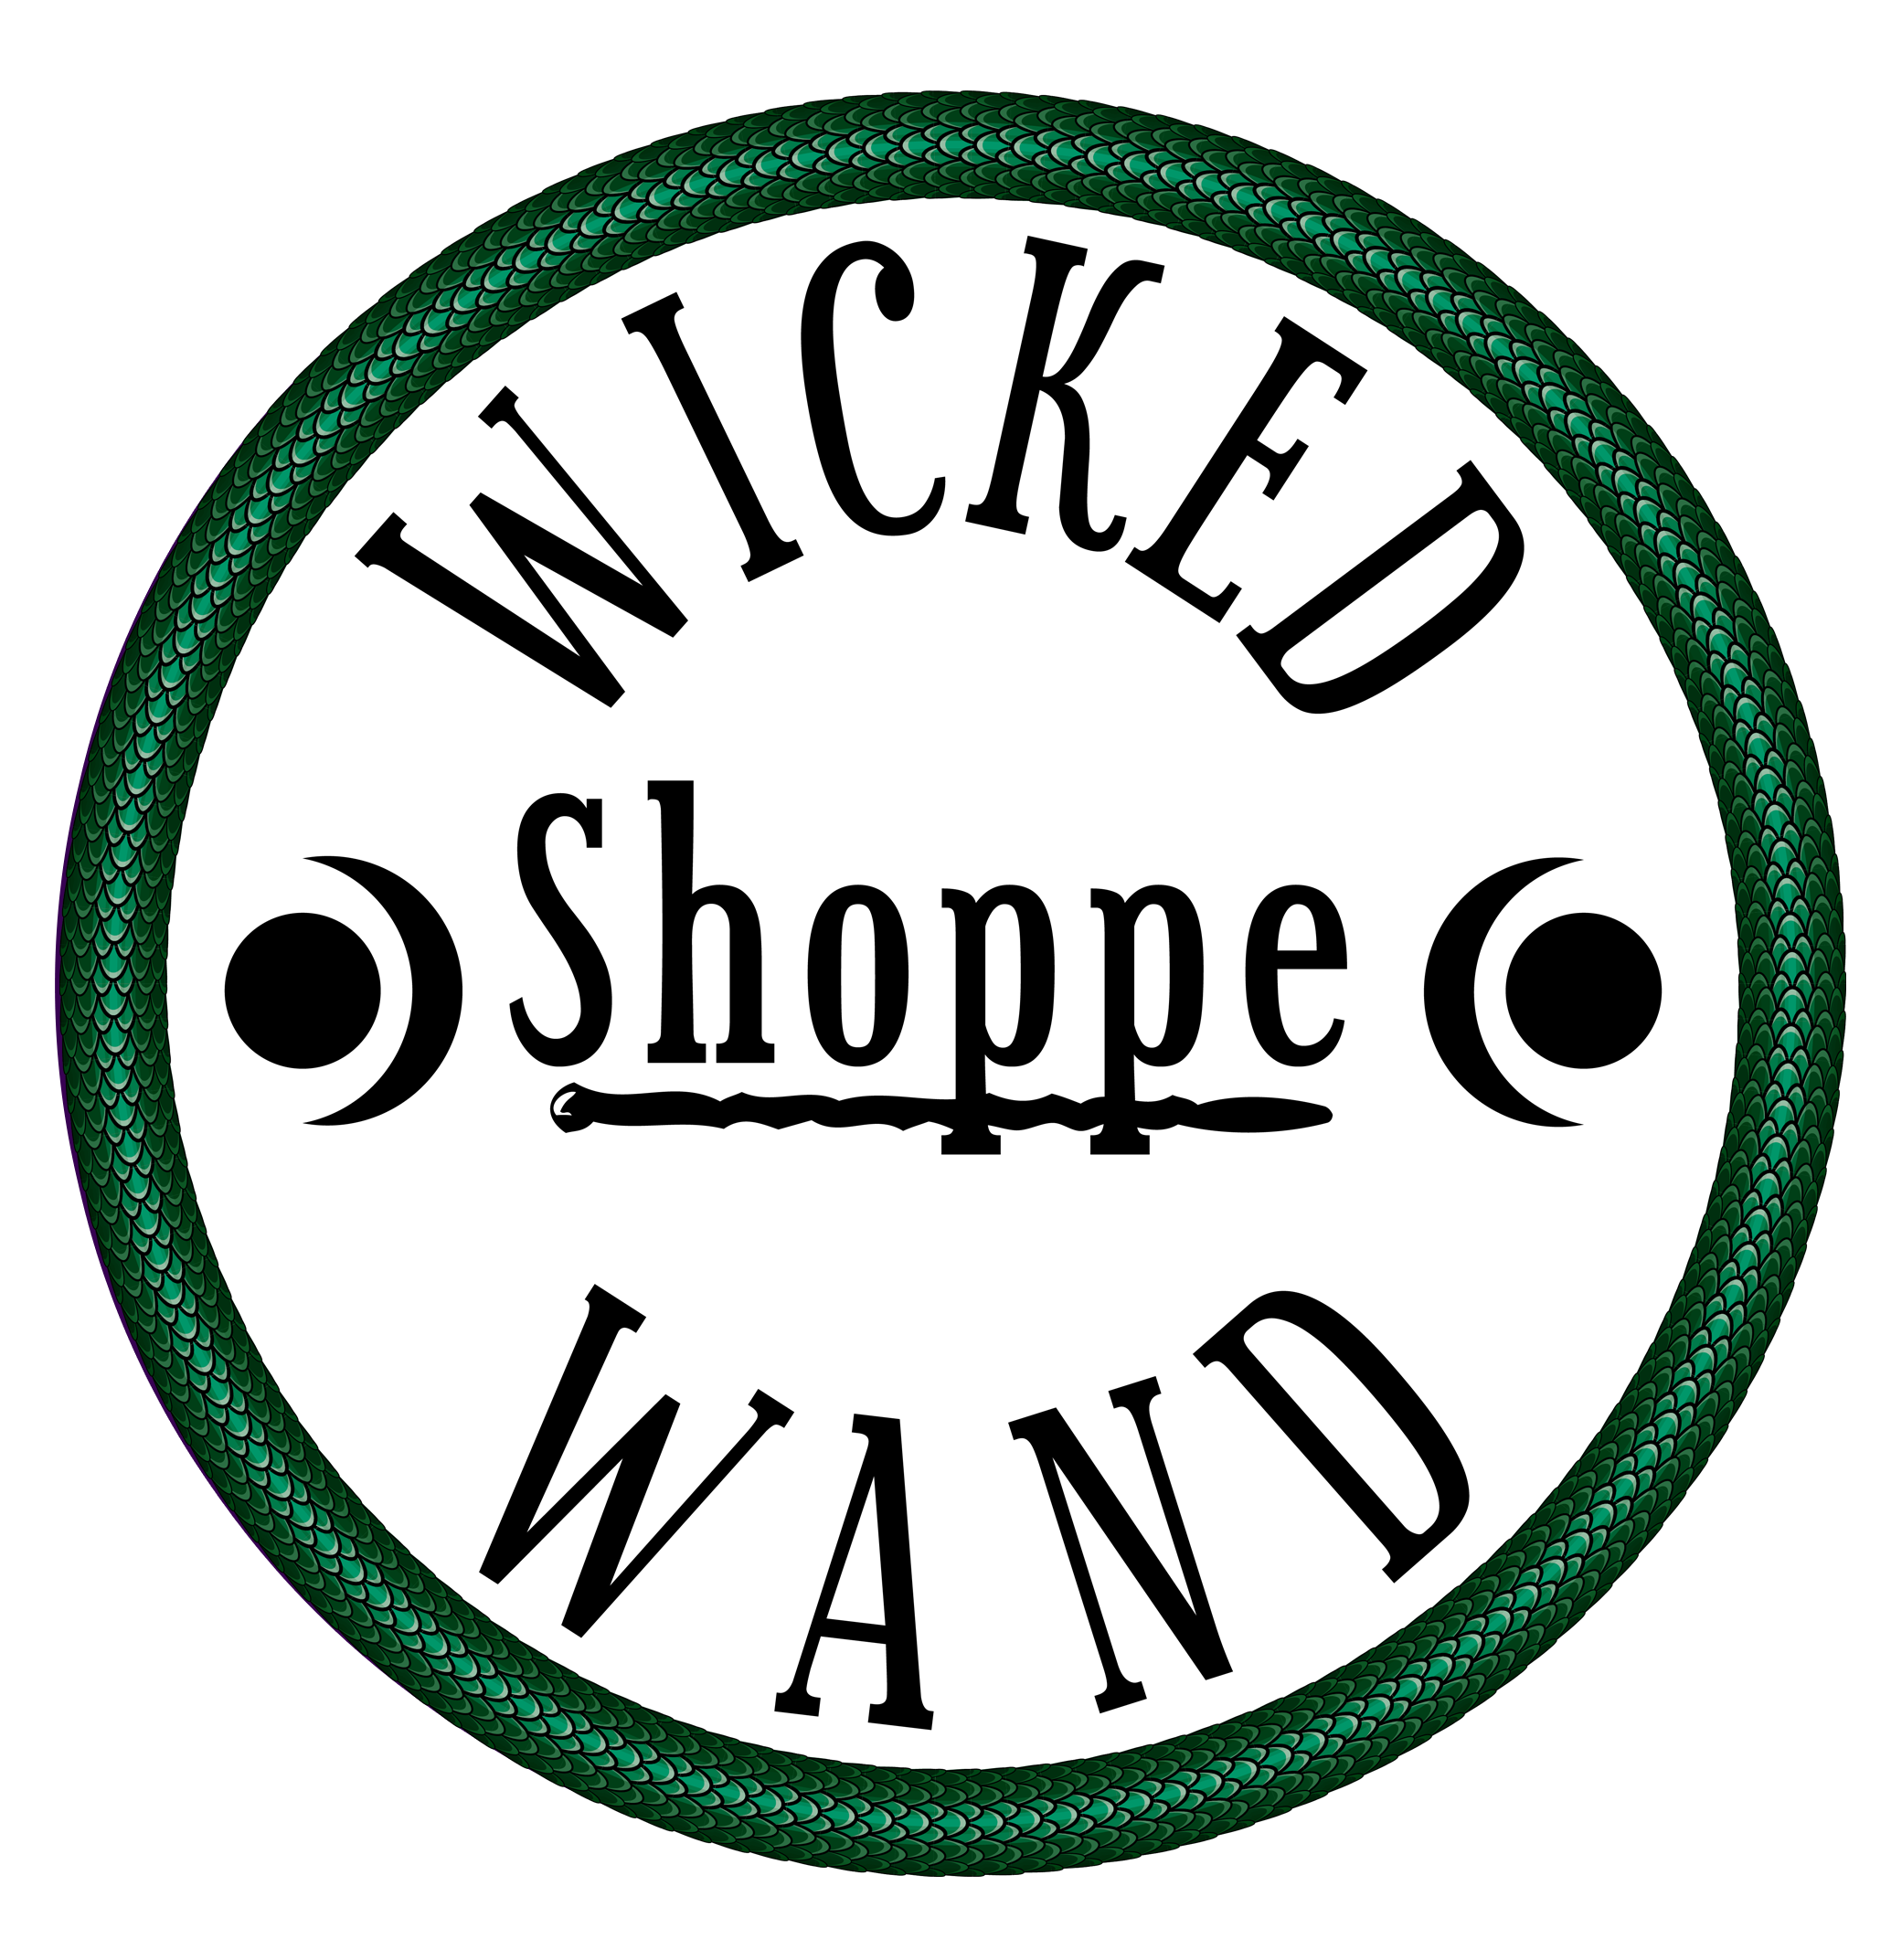 wicked wand shoppe, pagan symbols, occult design, handmade curiosities